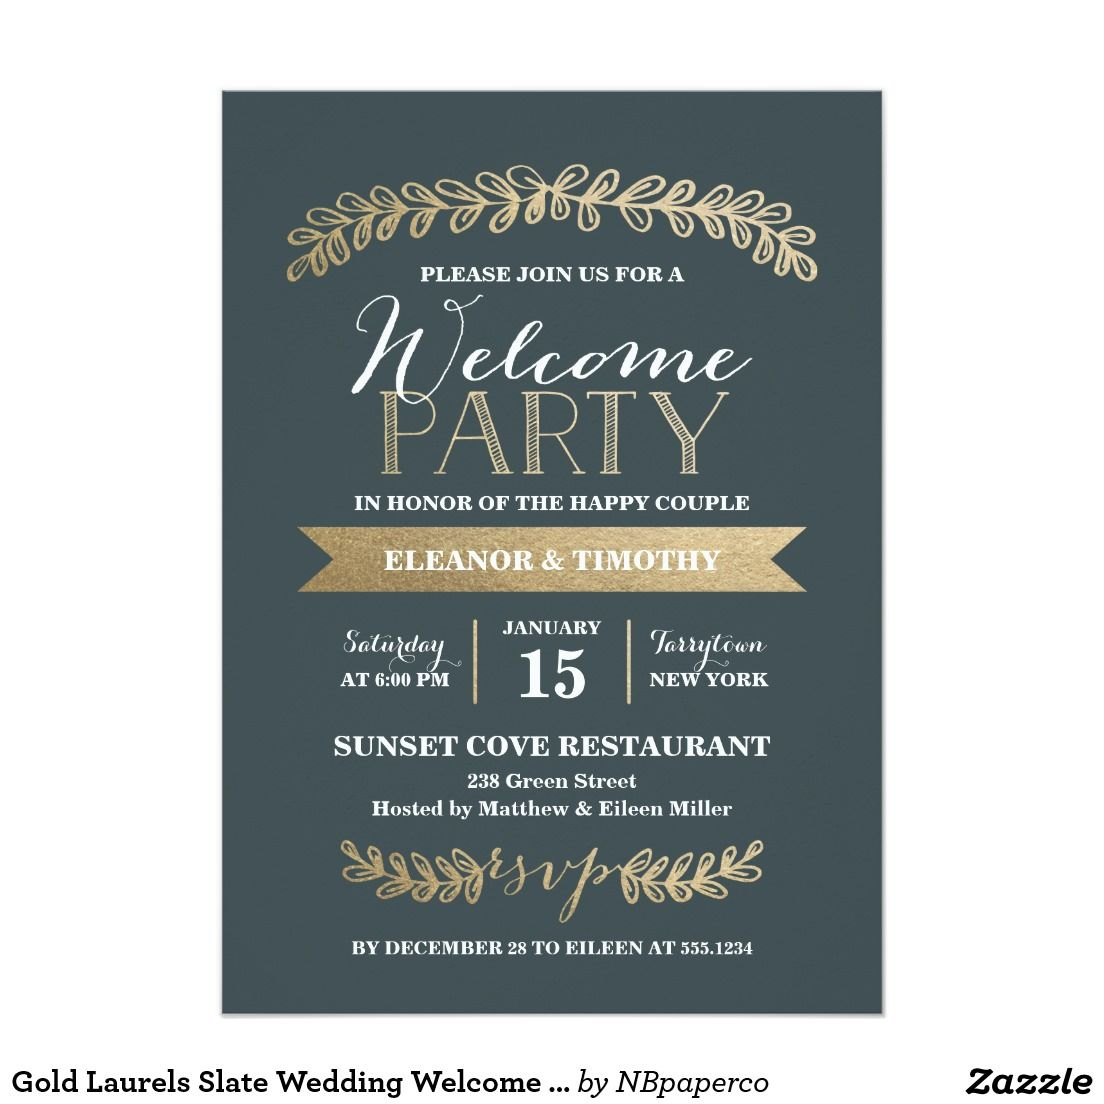 Gold Laurels Slate Wedding Welcome Party Invite Zazzle Gold regarding measurements 1104 X 1104